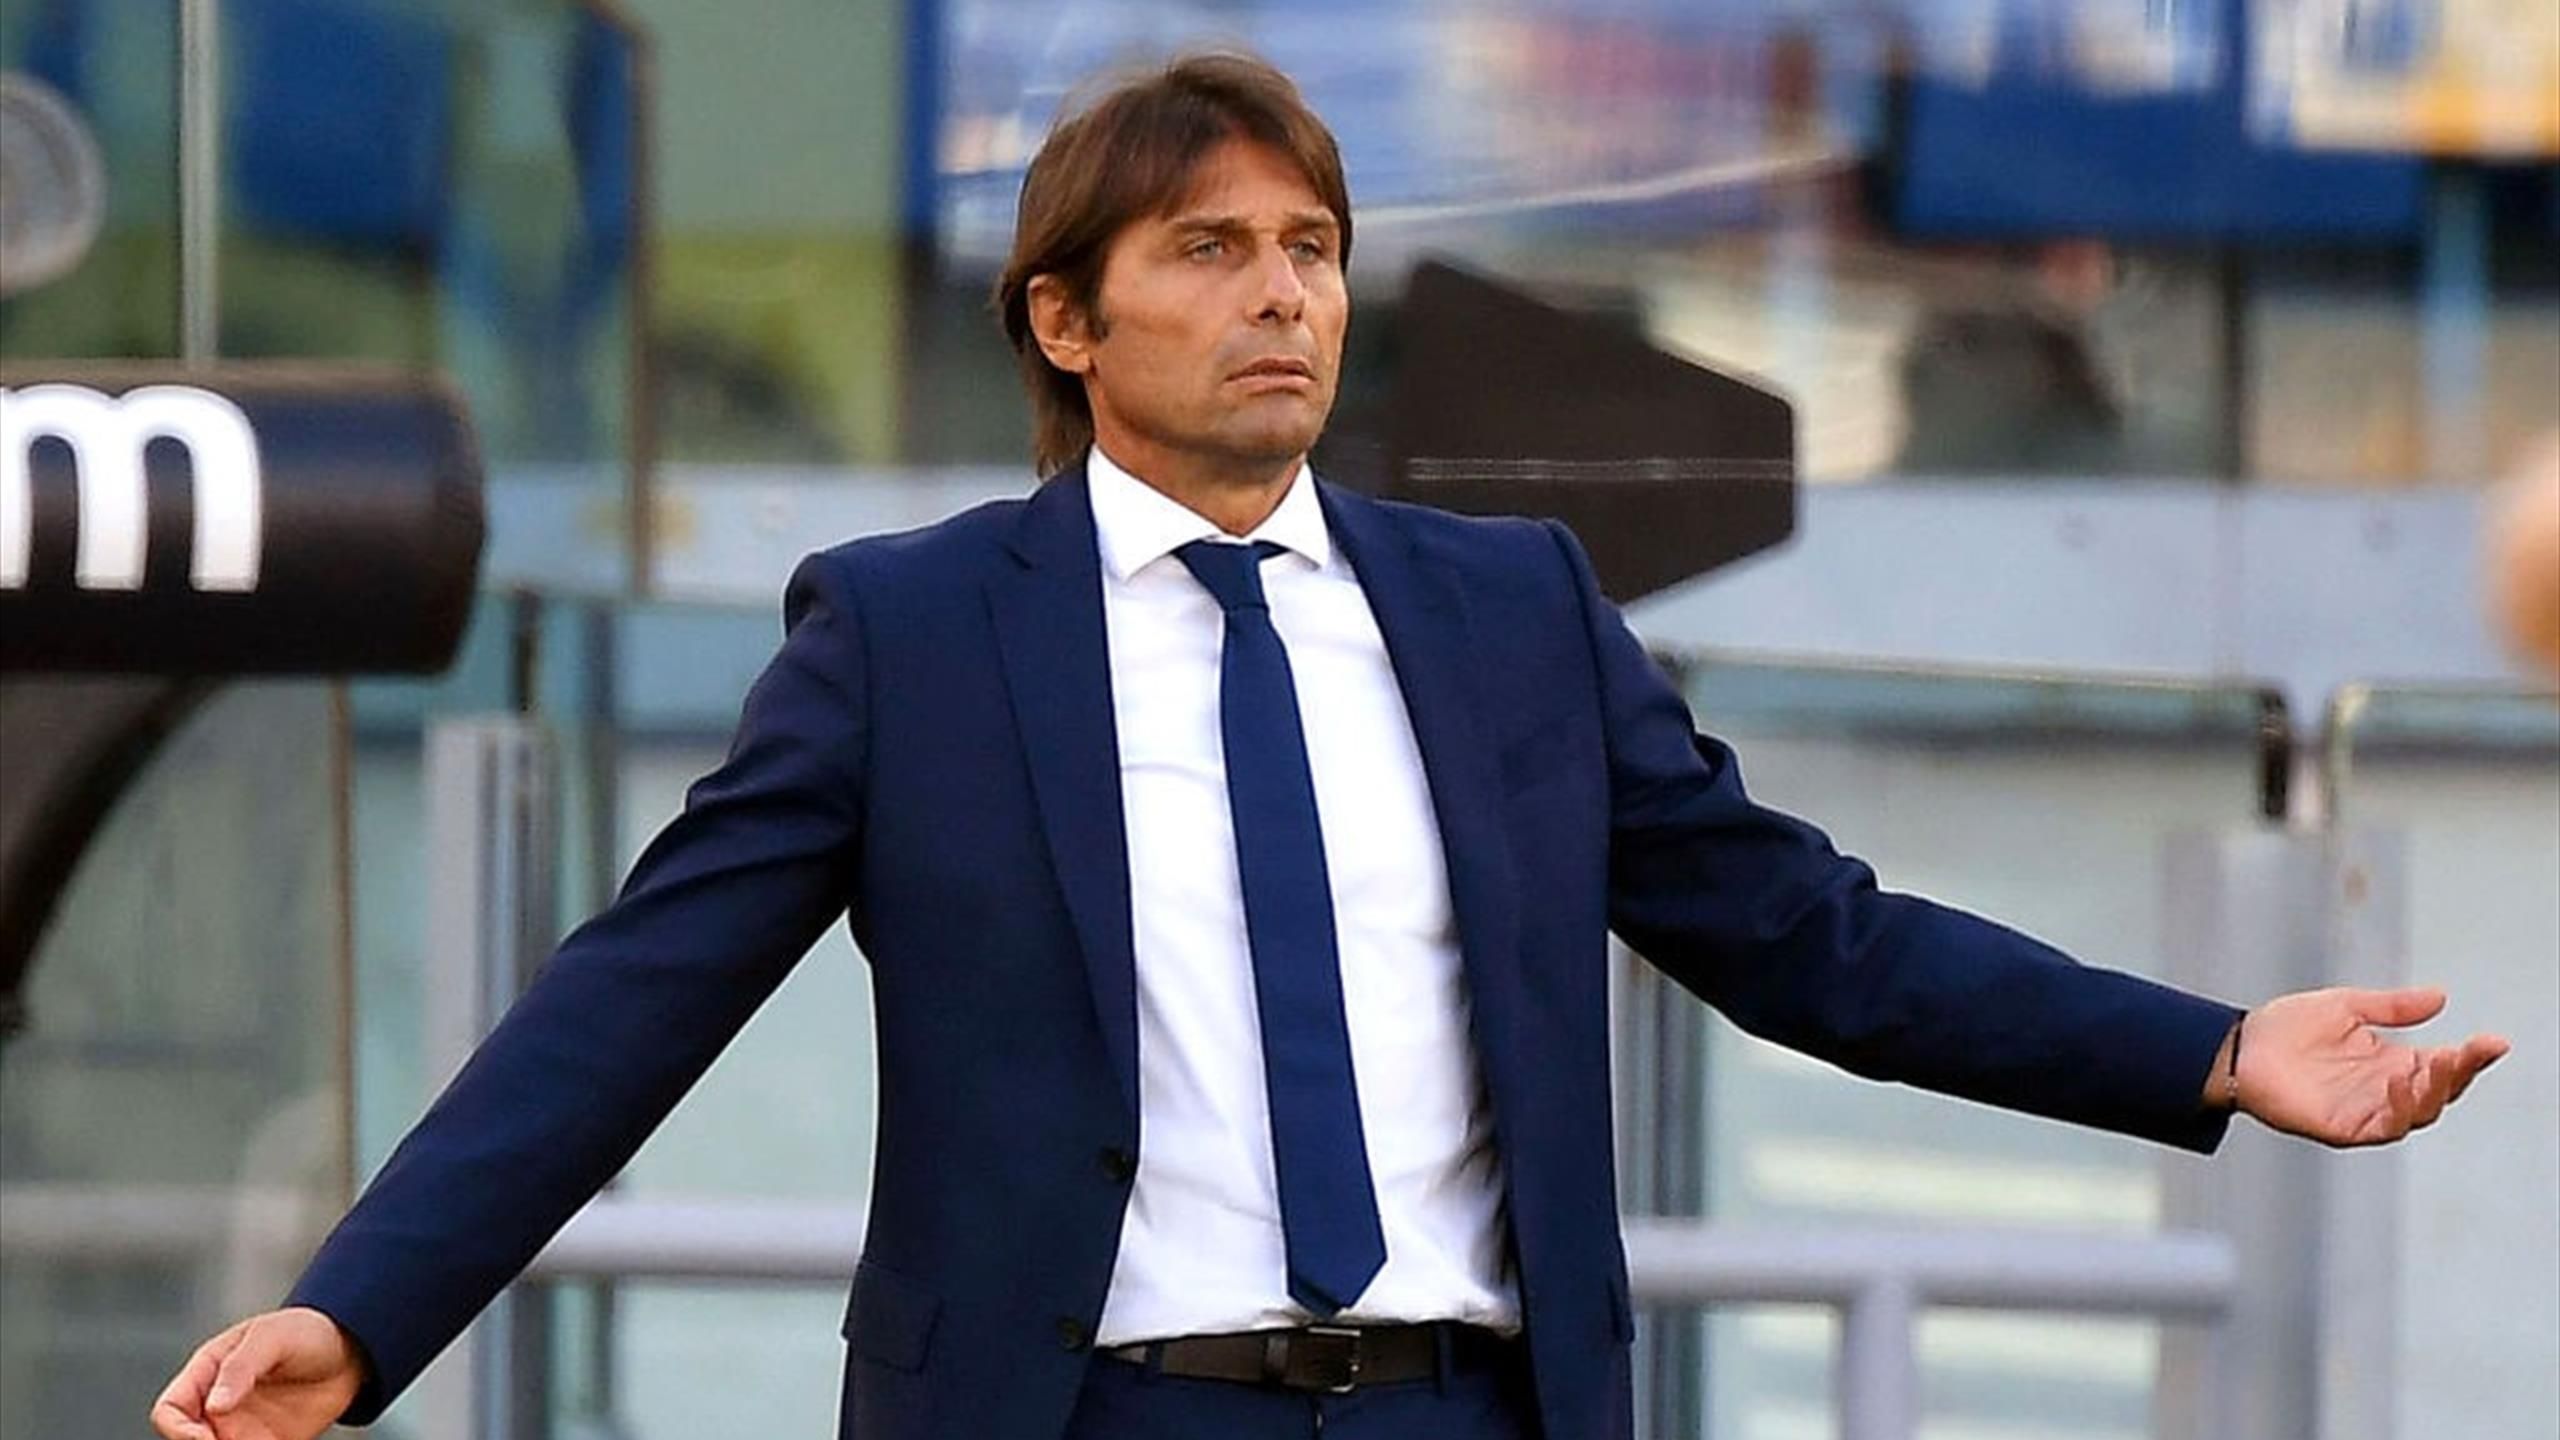 Antonio Conte - Manager profile